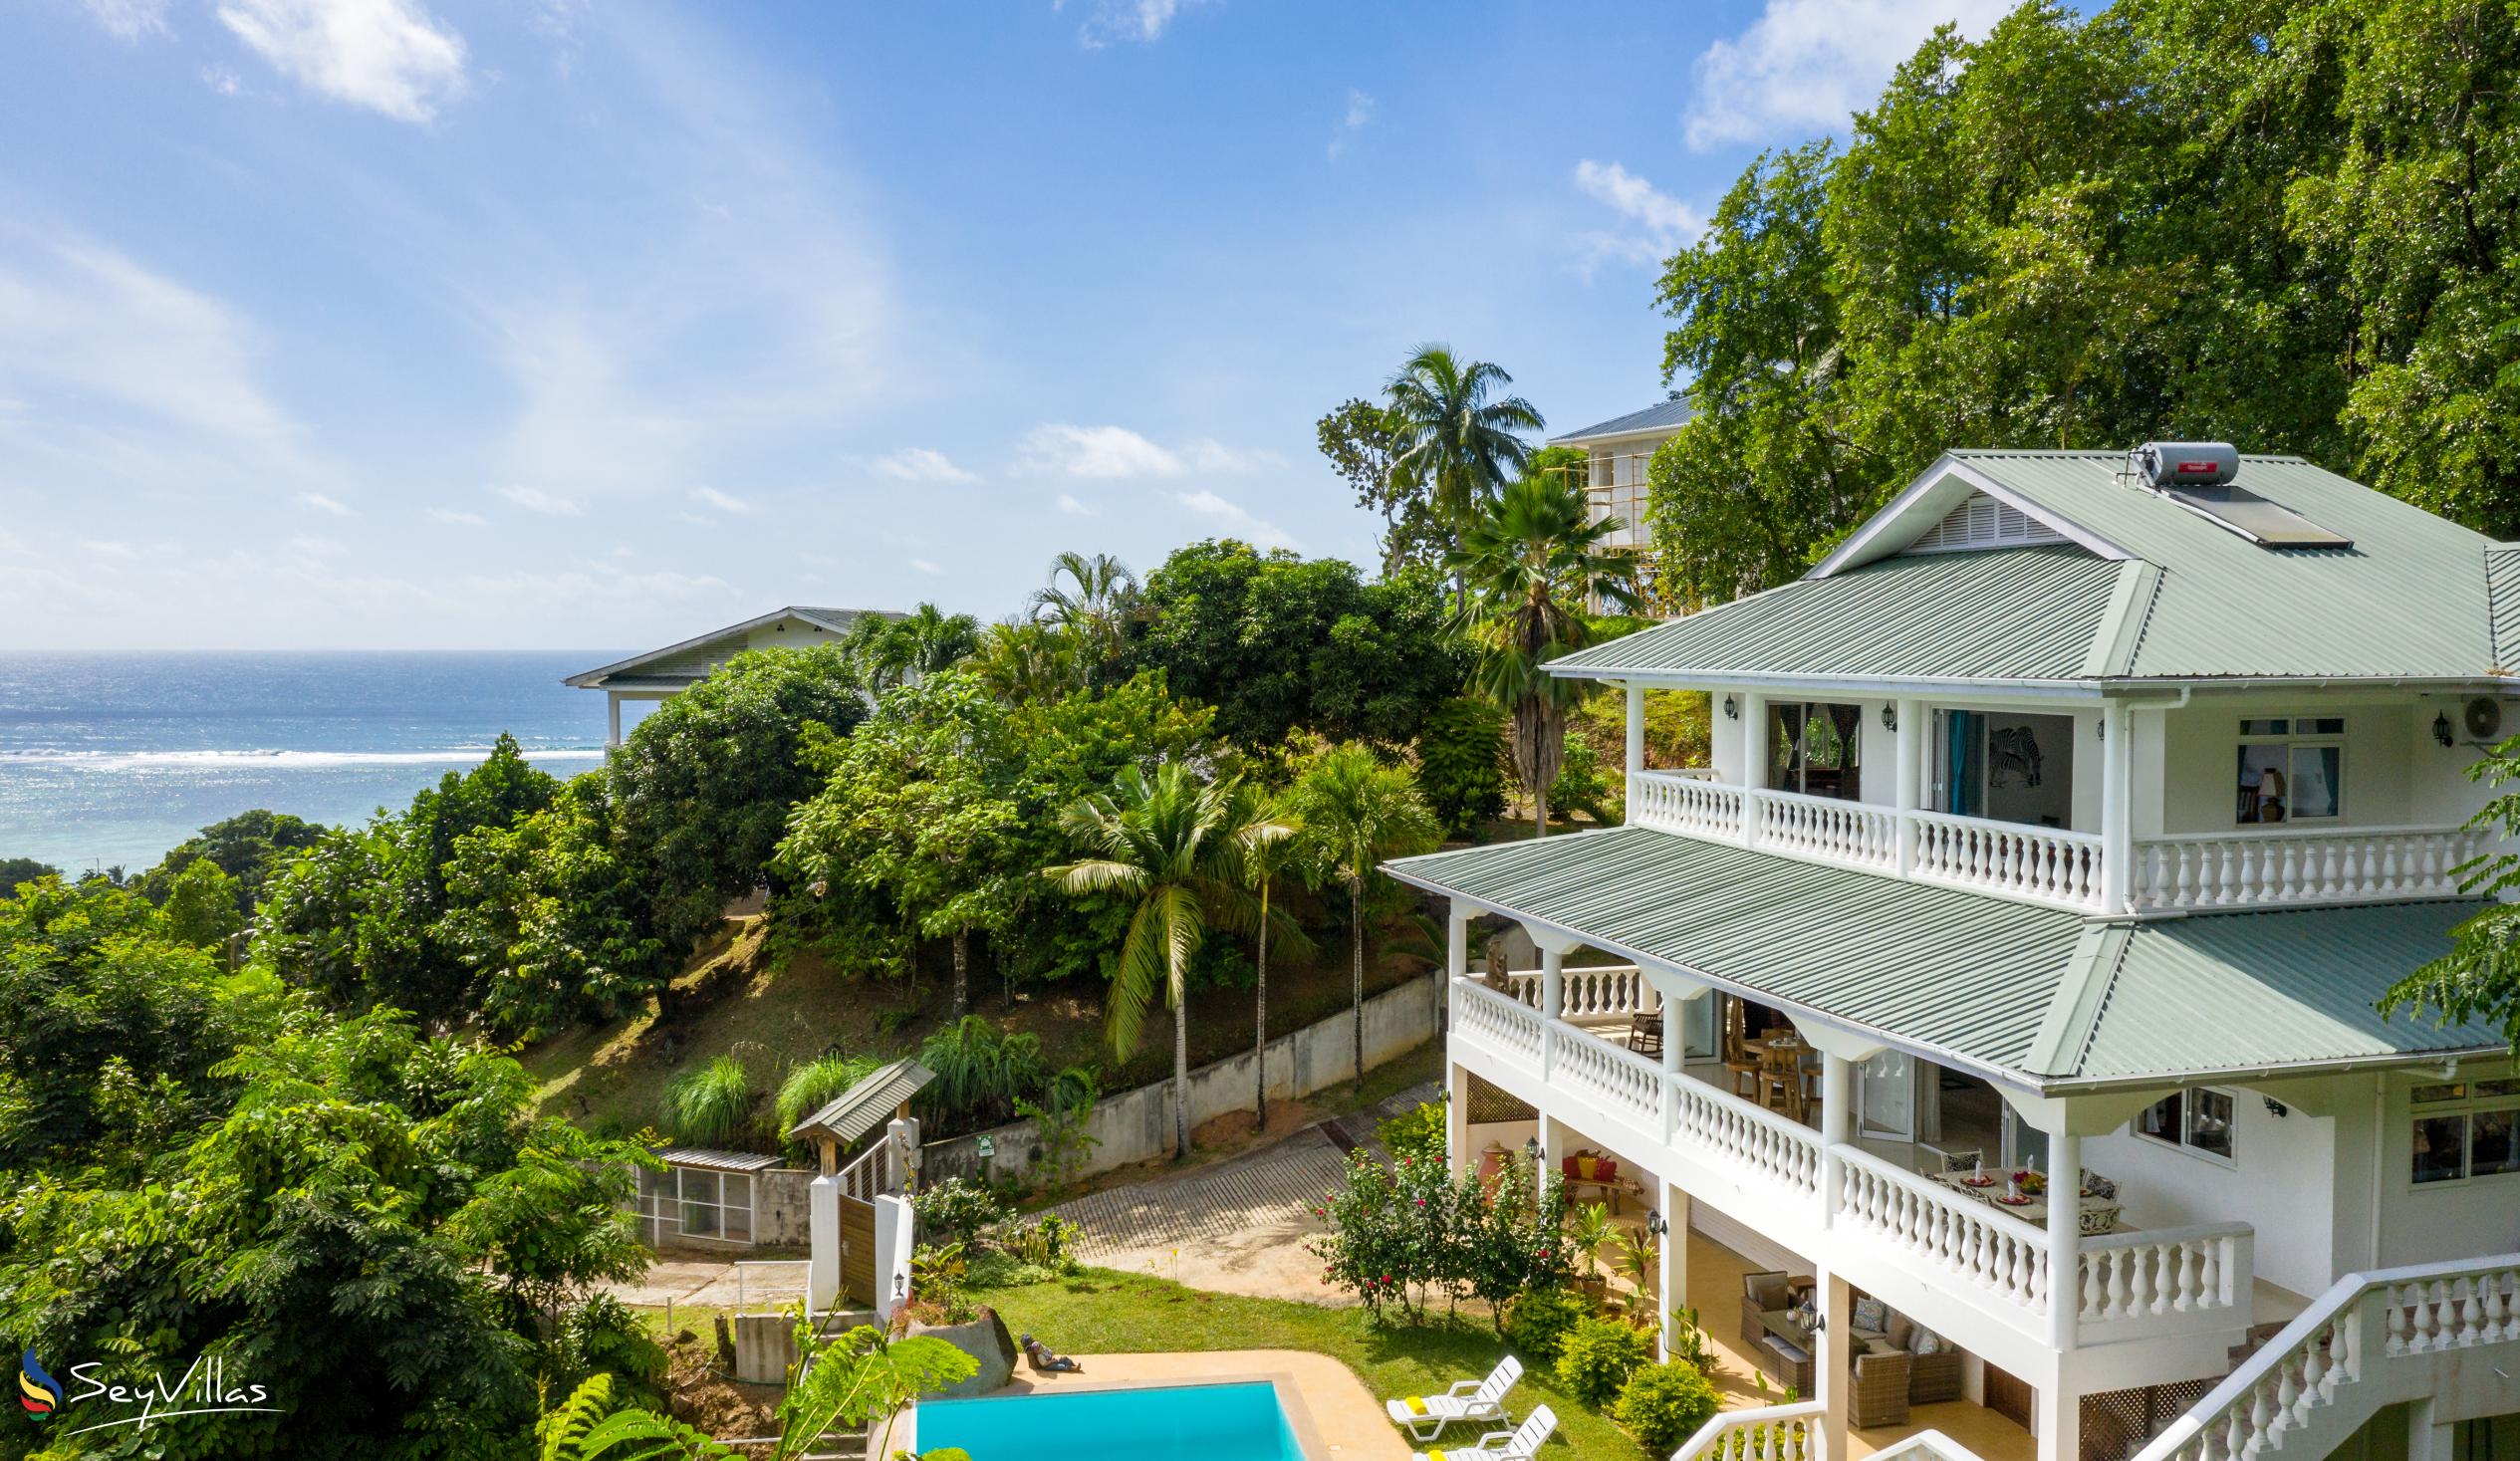 Photo 2: Villa Karibu - Outdoor area - Mahé (Seychelles)